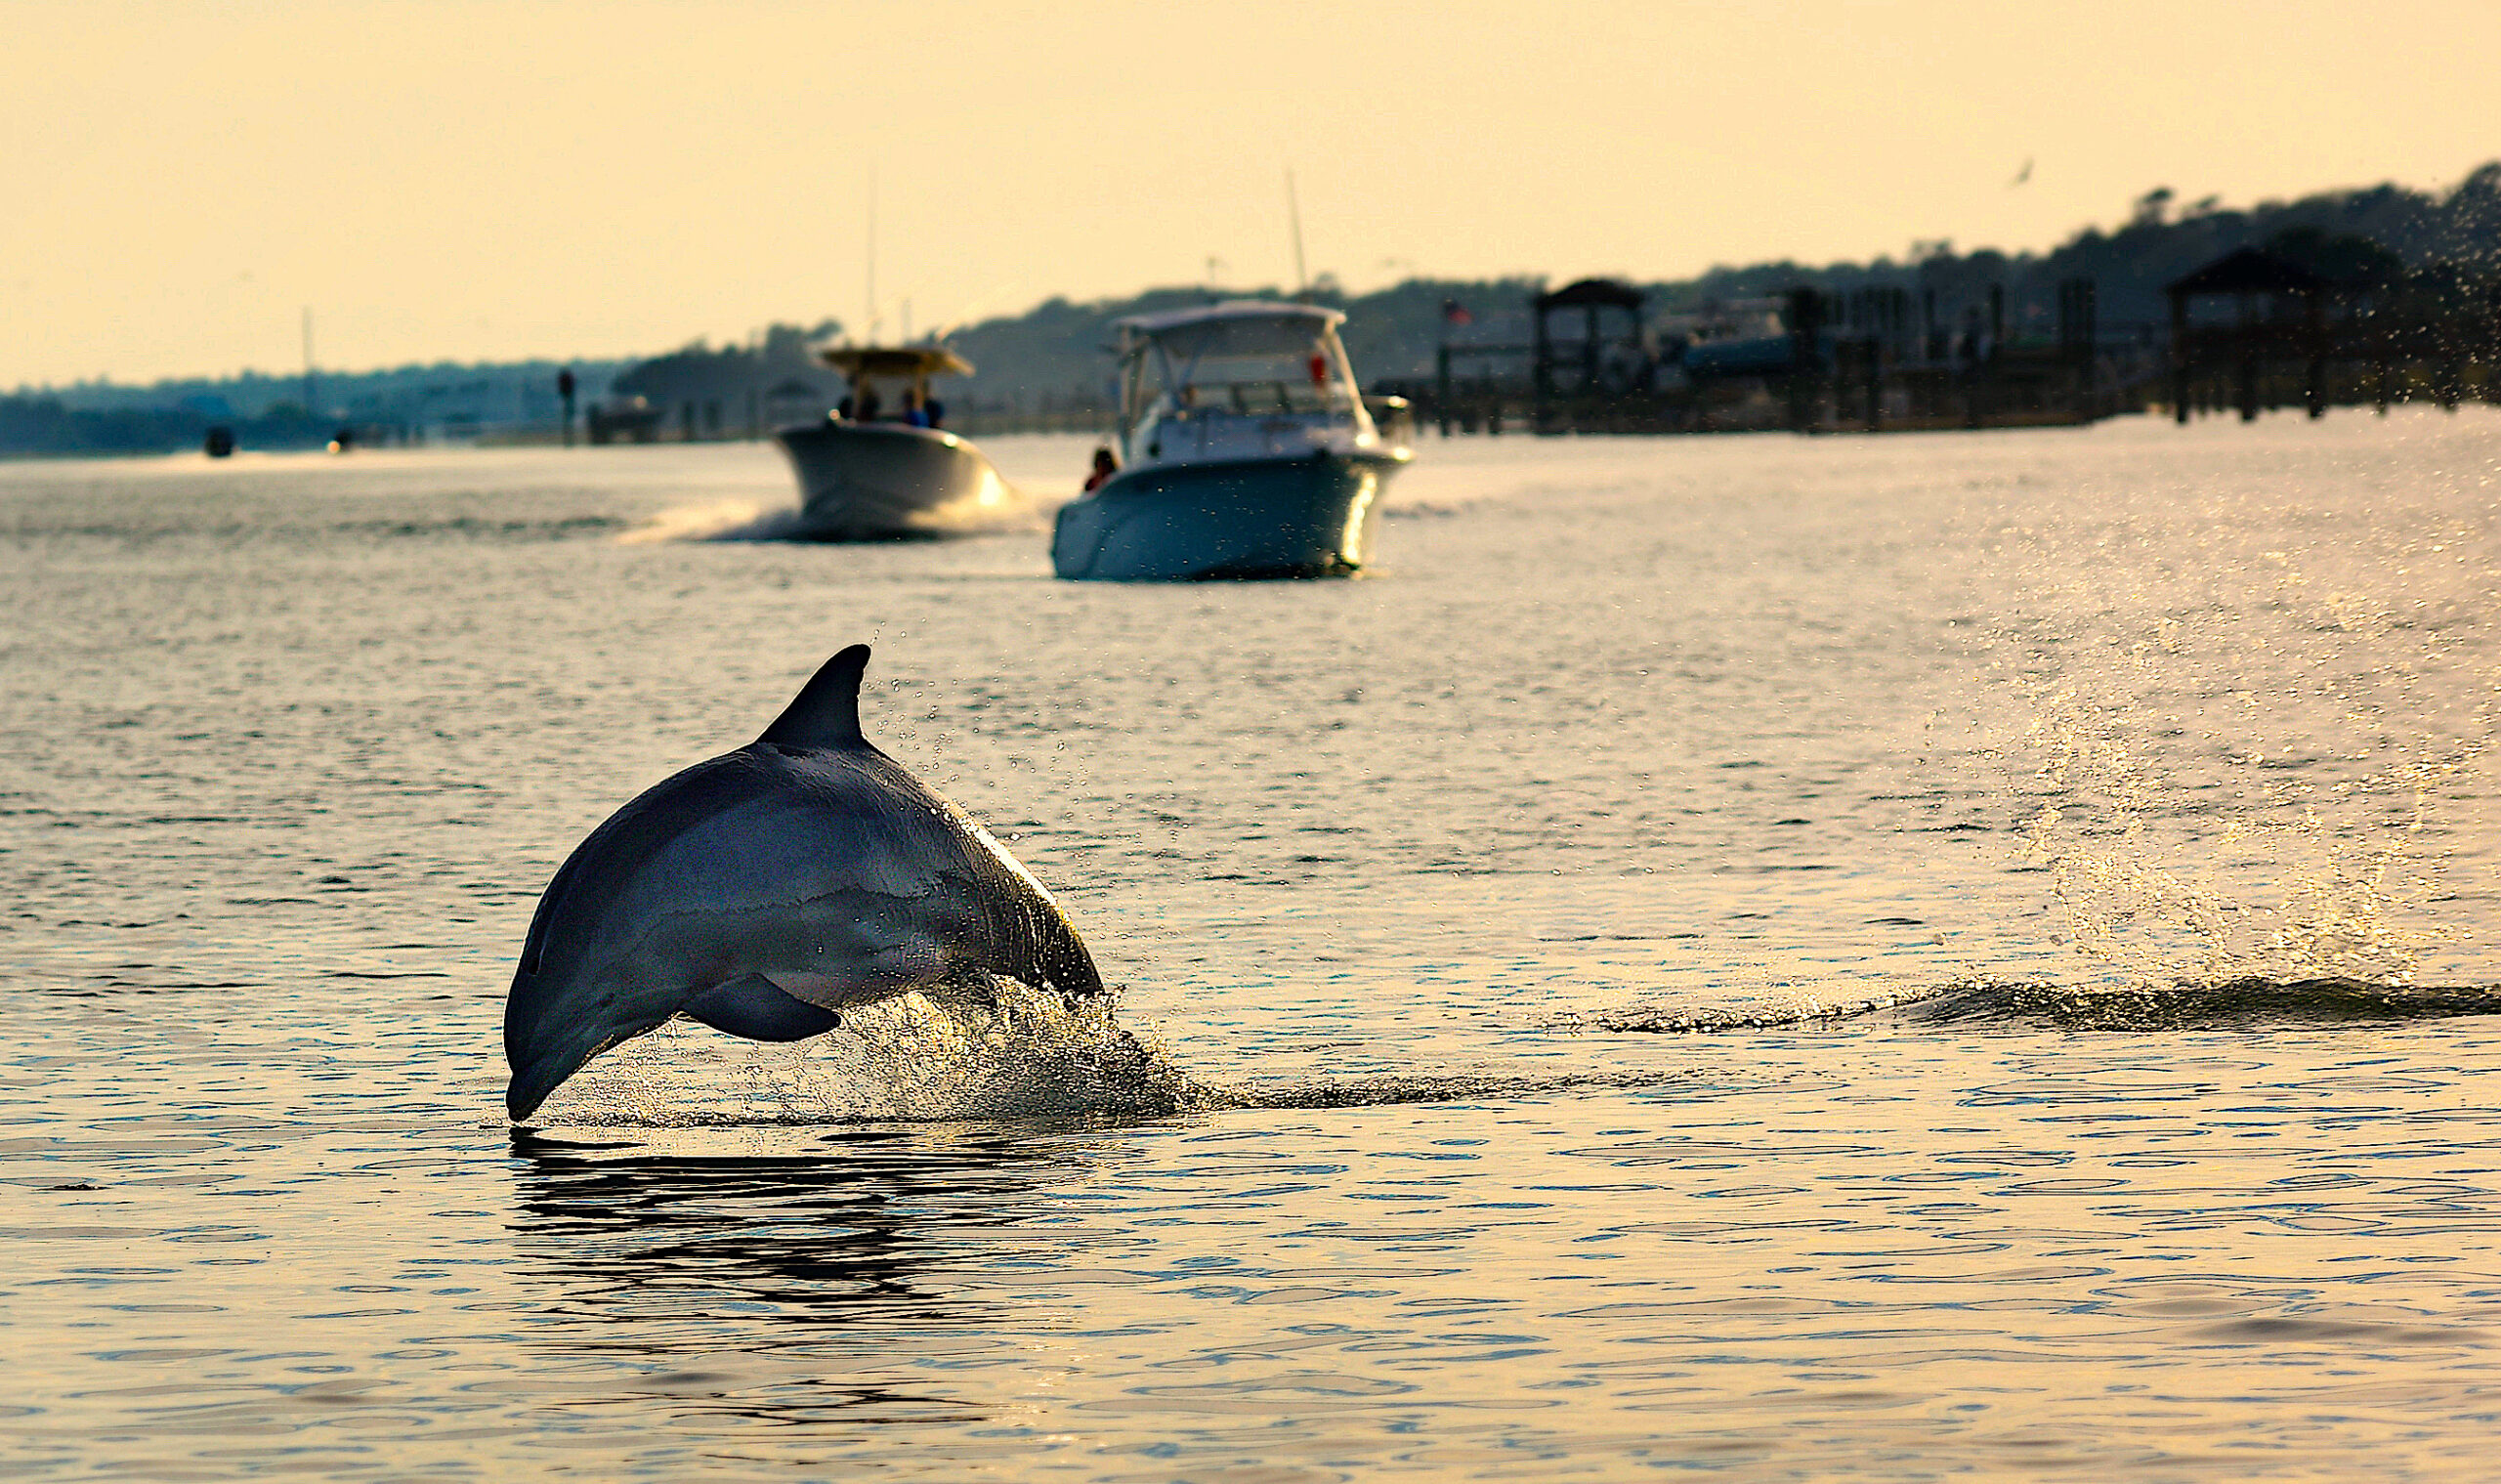 image: dolphin at play.